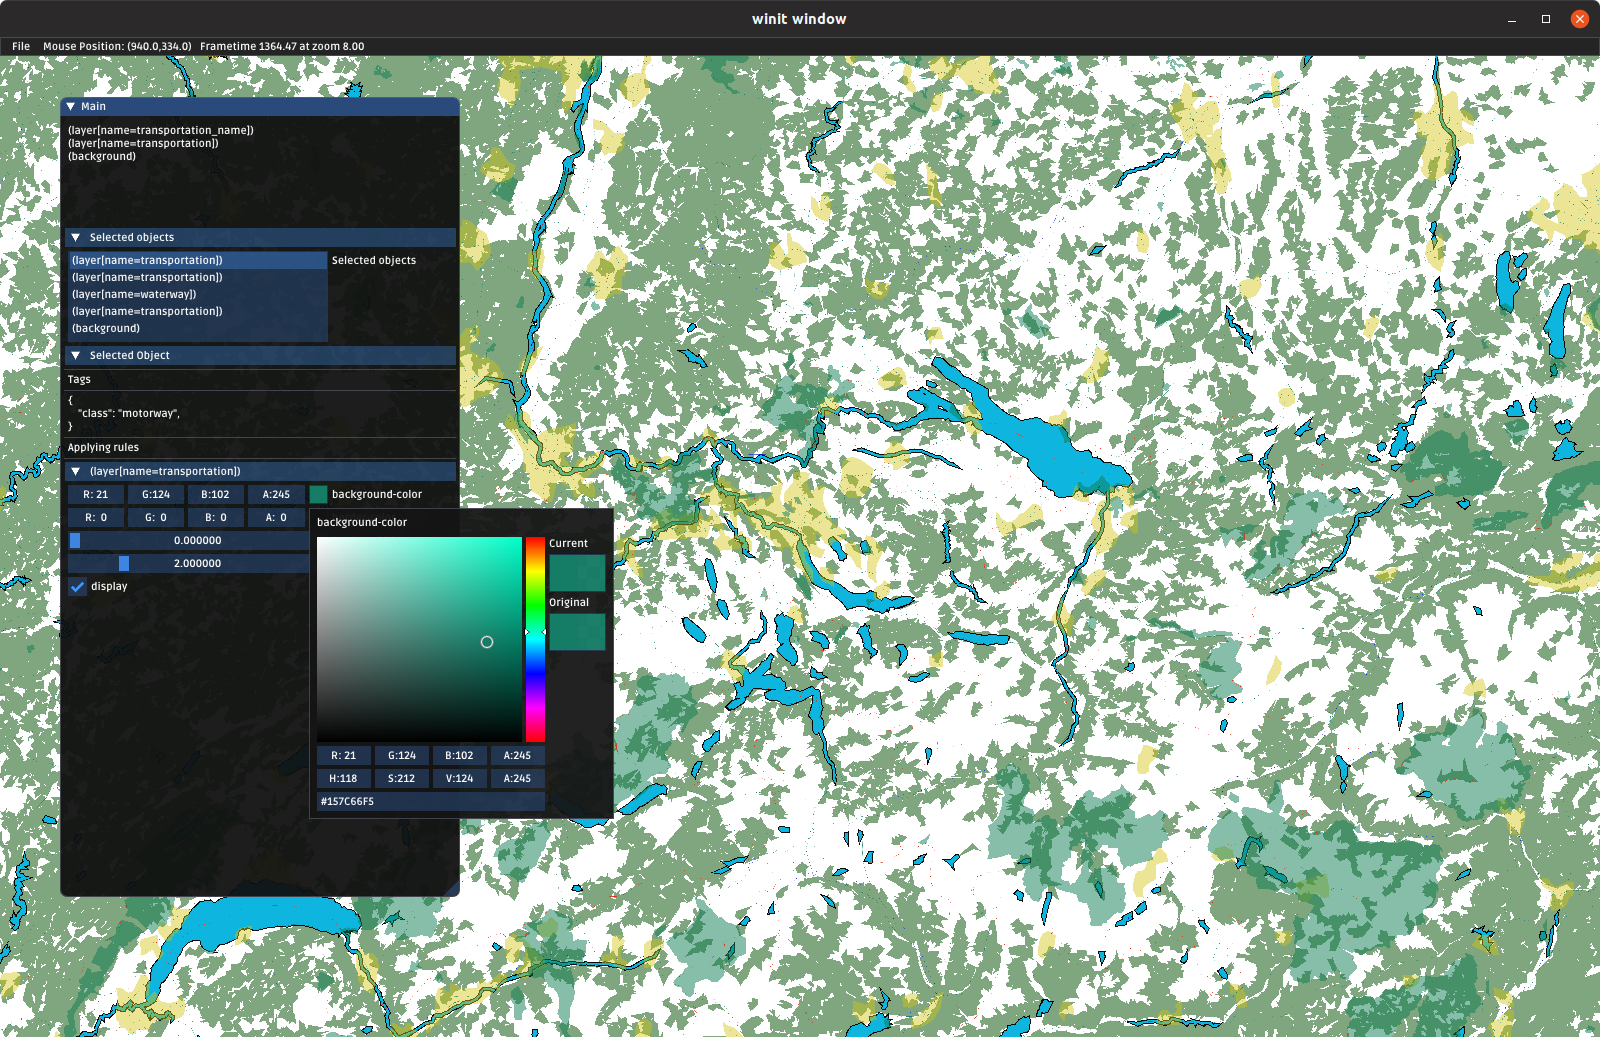 sailor screenshot: vector terrain map and some basic UI